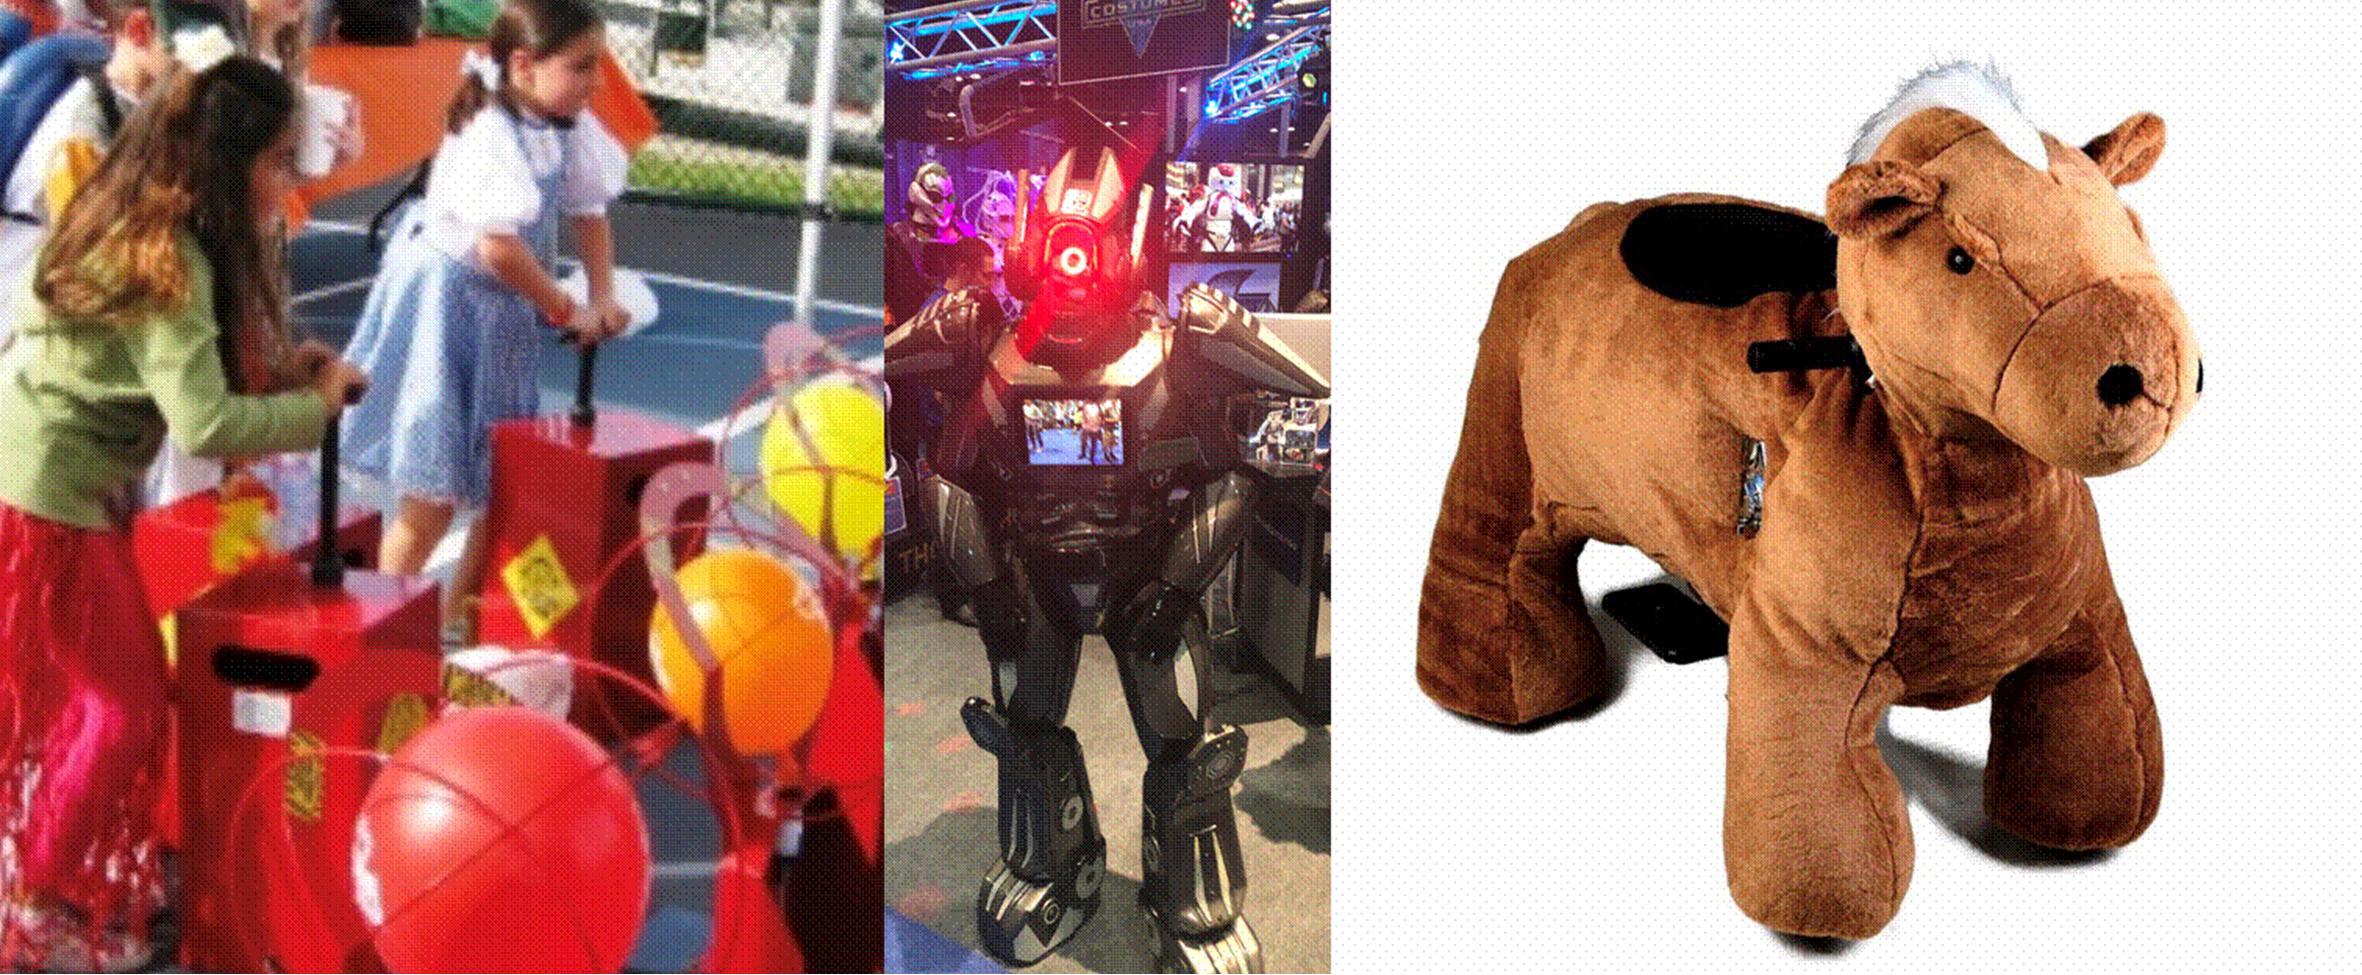 New York City party rental fun, balloon blast, robot costume, motorized plush horse